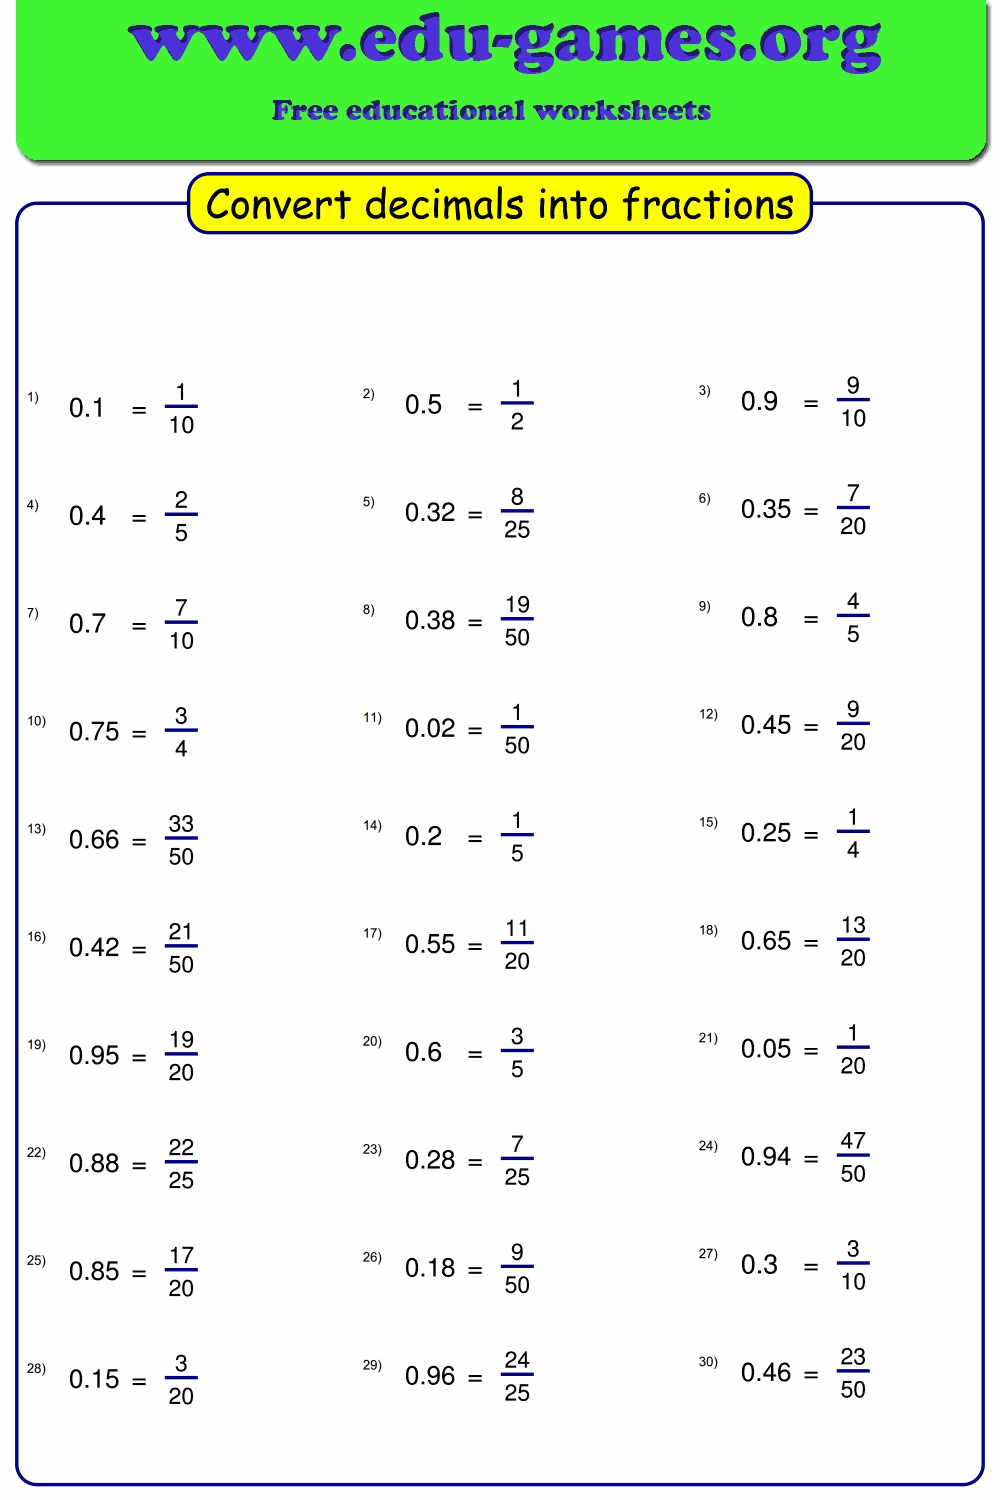 math-puzzles-2nd-grade